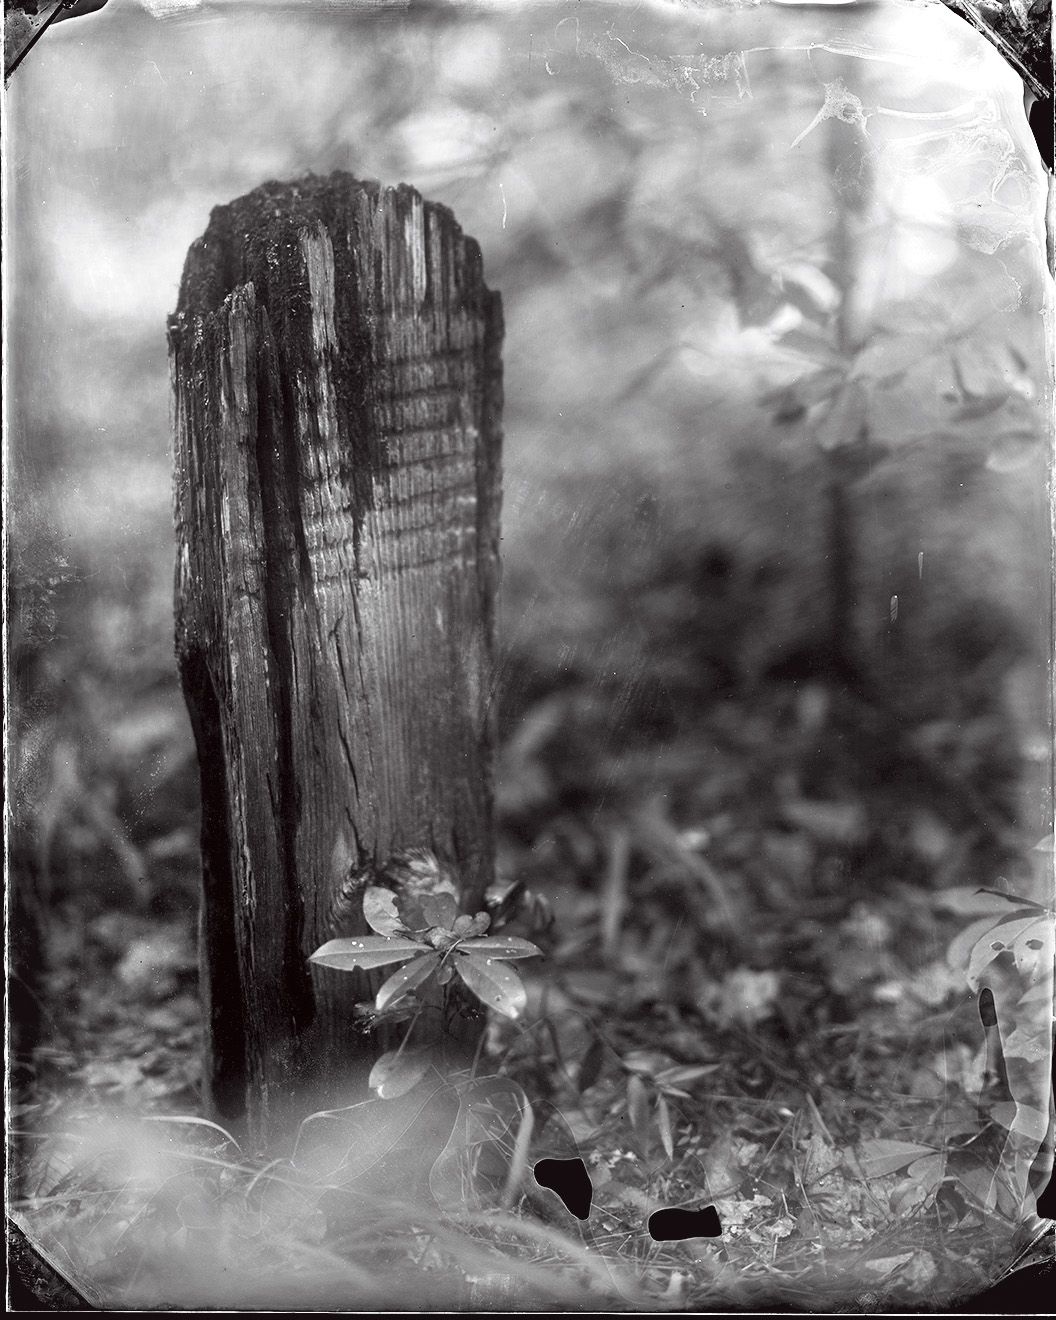 A wooden grave marker